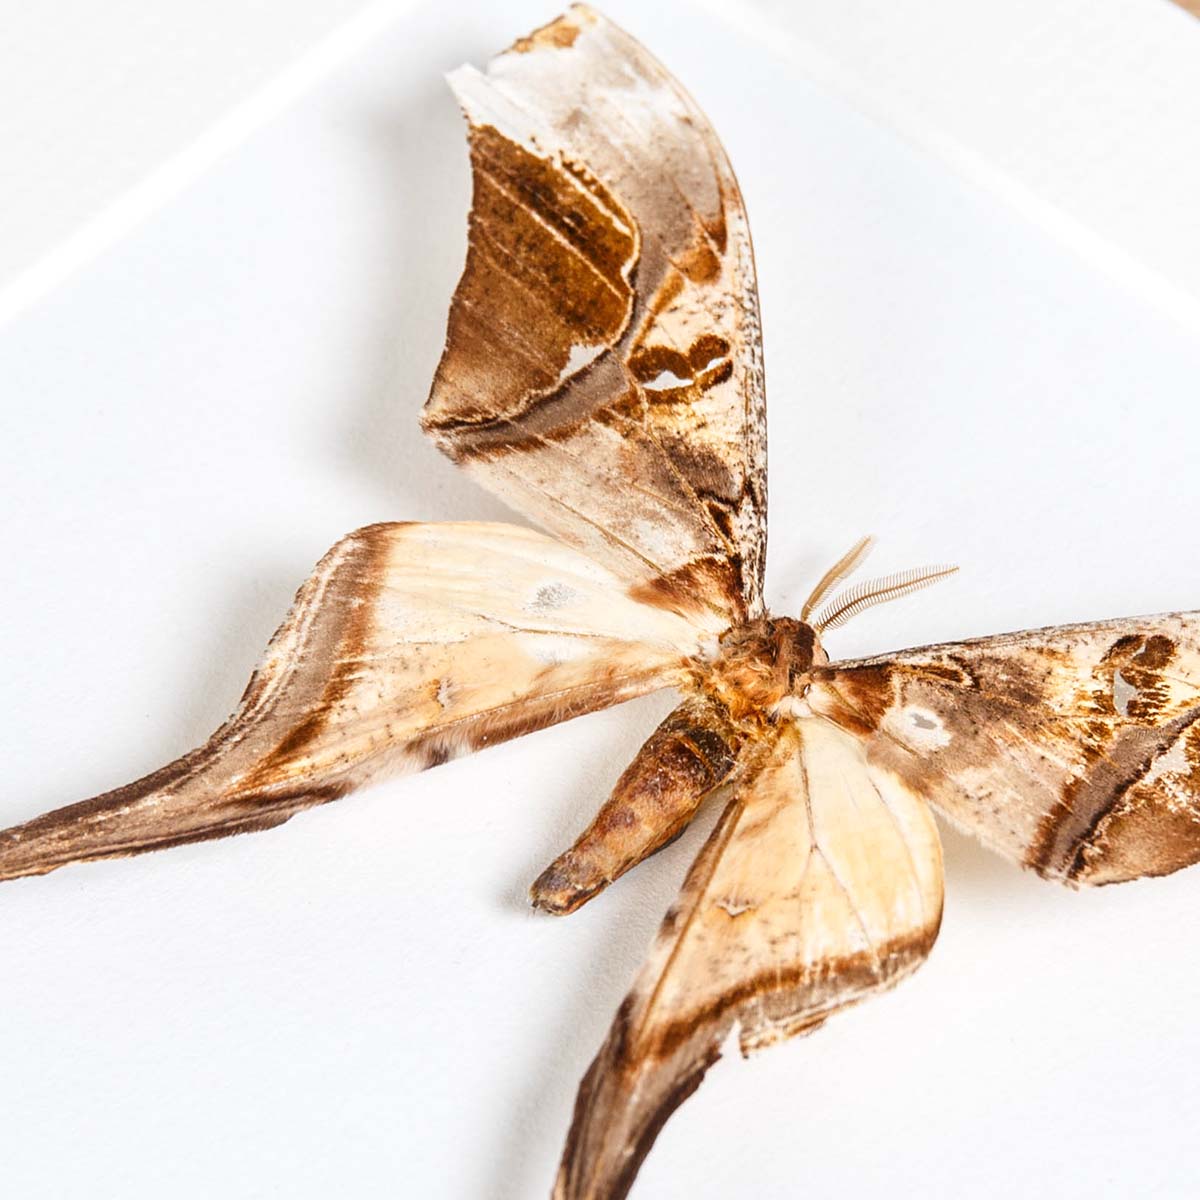 Giant Silkworm Moth In Box Frame (Copiopteryx semiramis banghaasi)